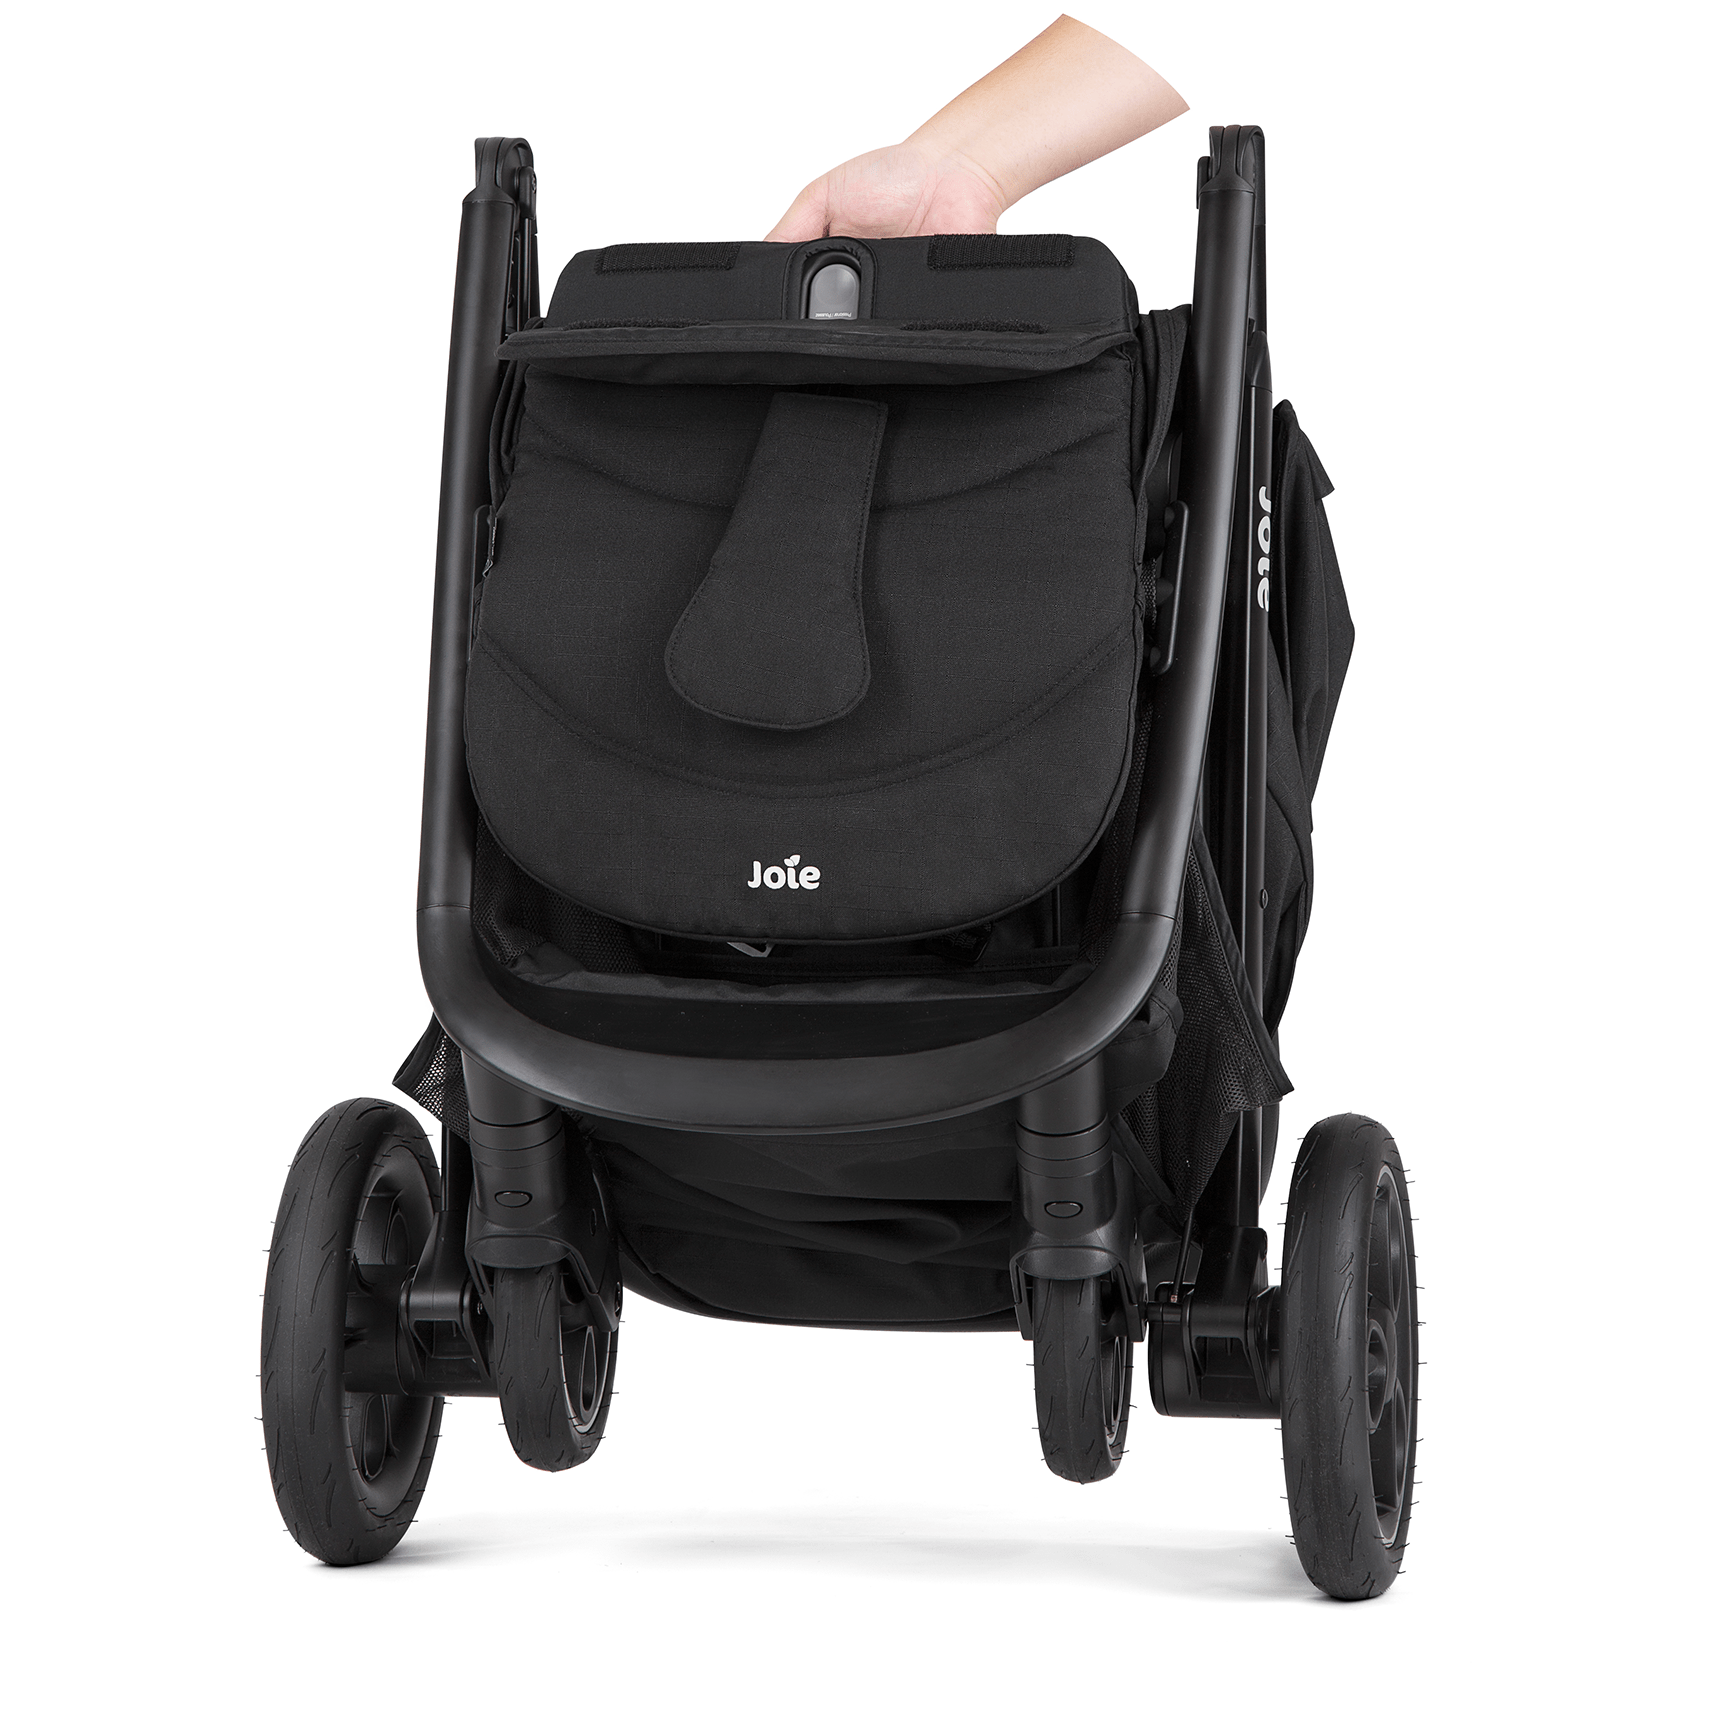 Joie 3 wheel pushchairs Joie Litetrax PRO Stroller - Shale S2213BASHA000